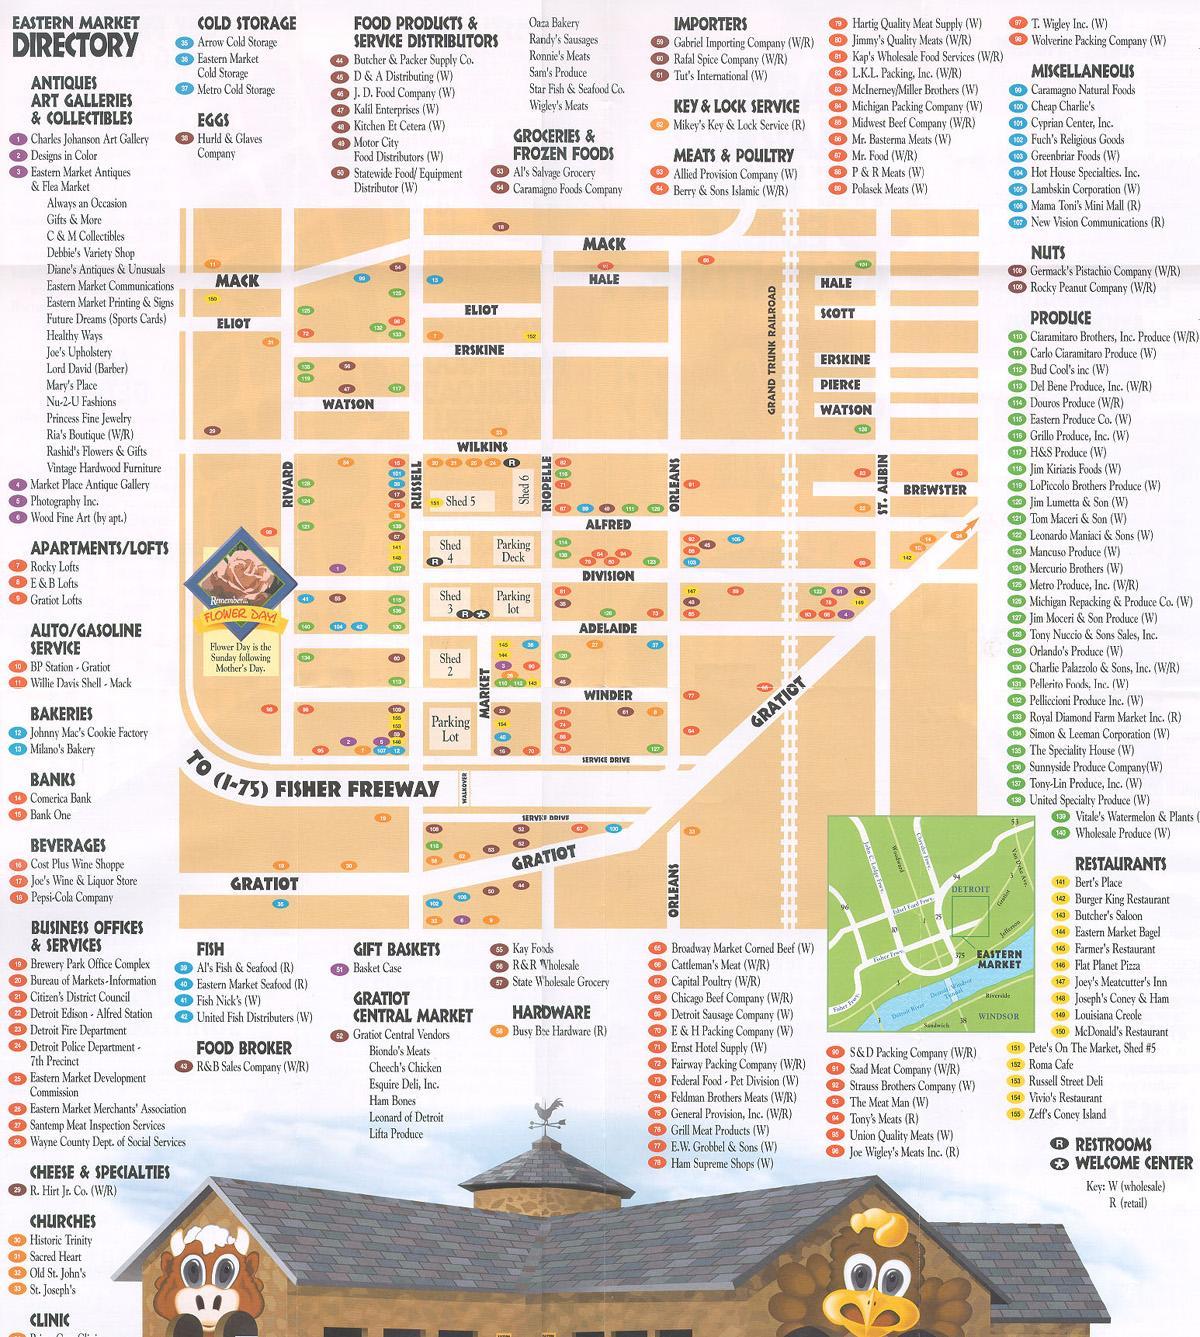 zemljevid vzhodne trgu Detroit